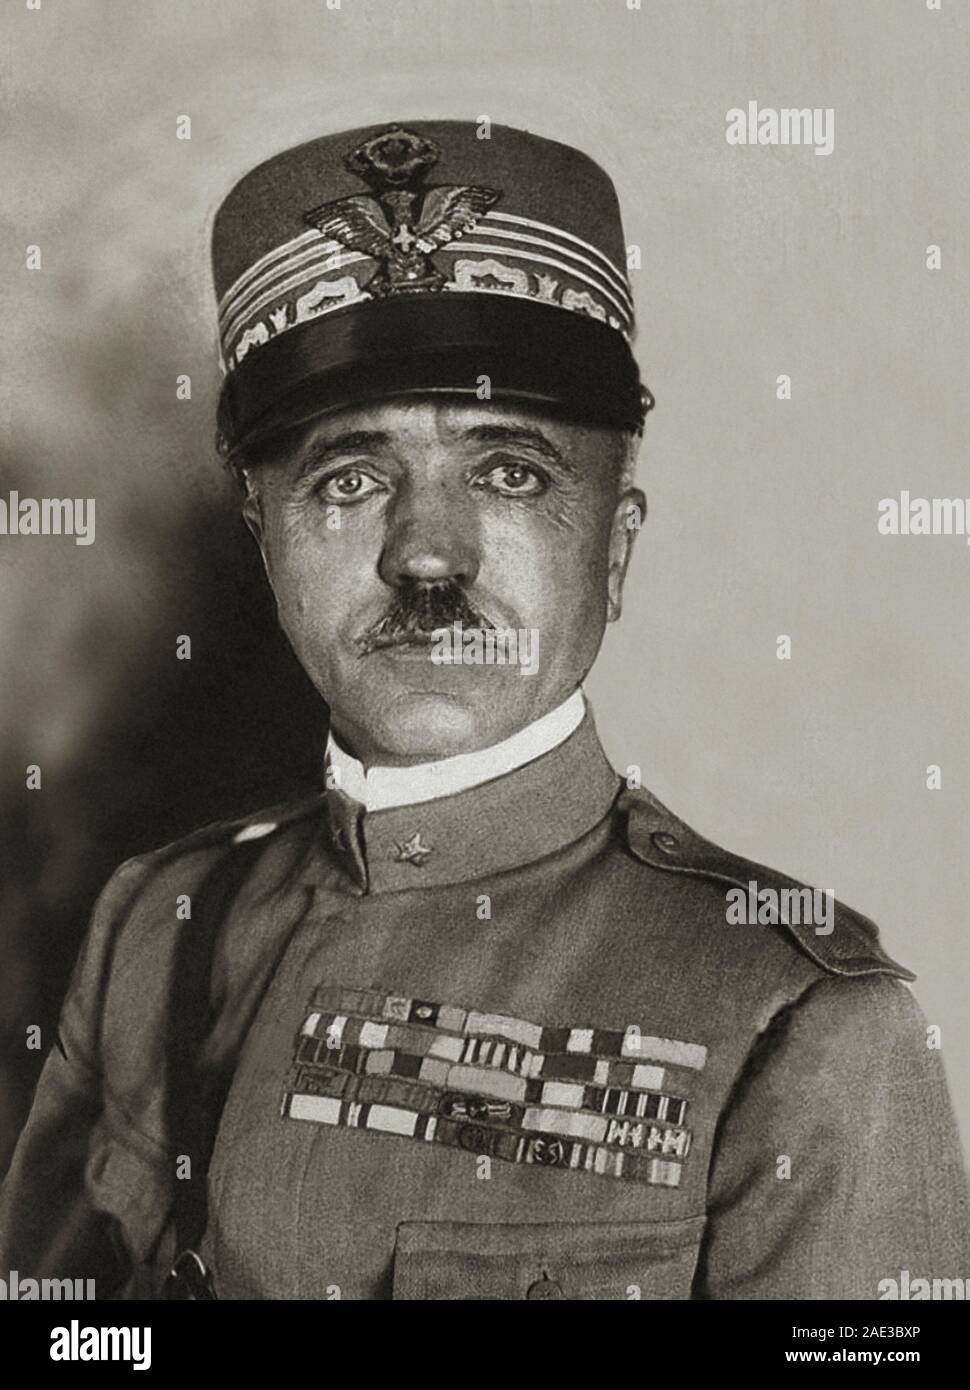 Marshal Pietro Badoglio, 1st Duke of Addis Abeba, 1st Marquess of Sabotino (1871 – 1956), was an Italian general during both World Wars and the first Stock Photo